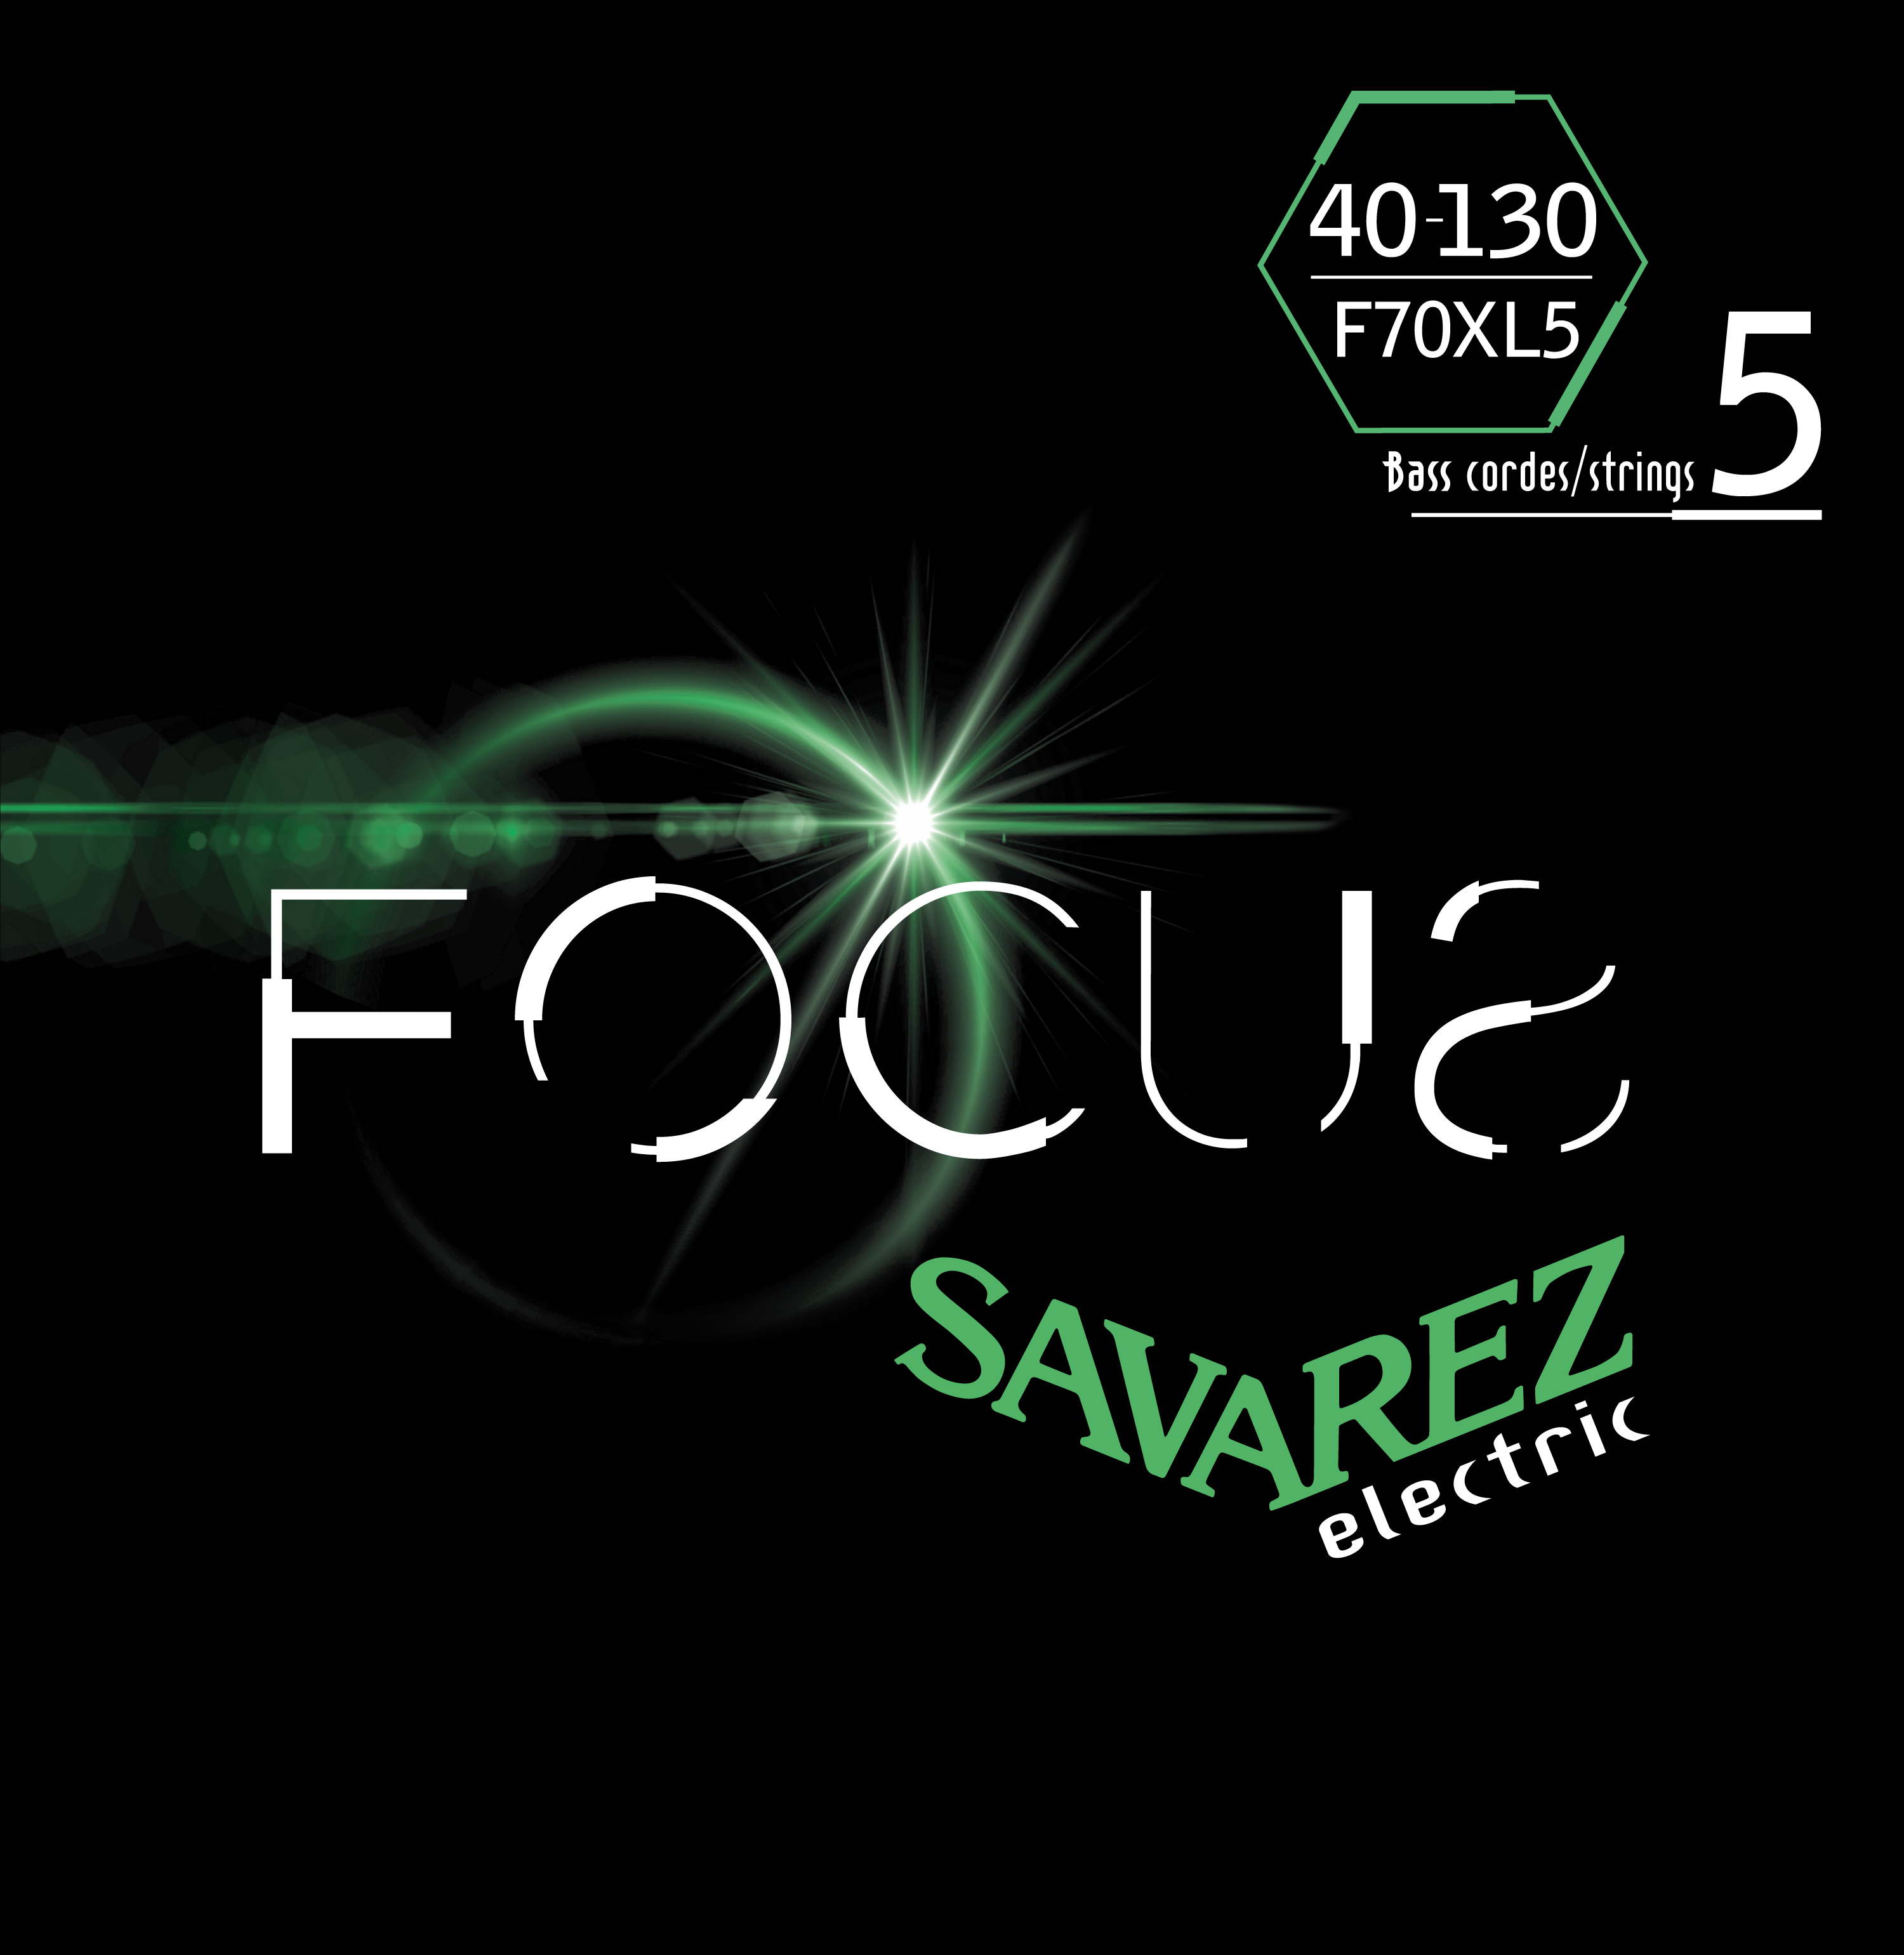 SAVAREZ ELECTRIC FOCUS F70XL5